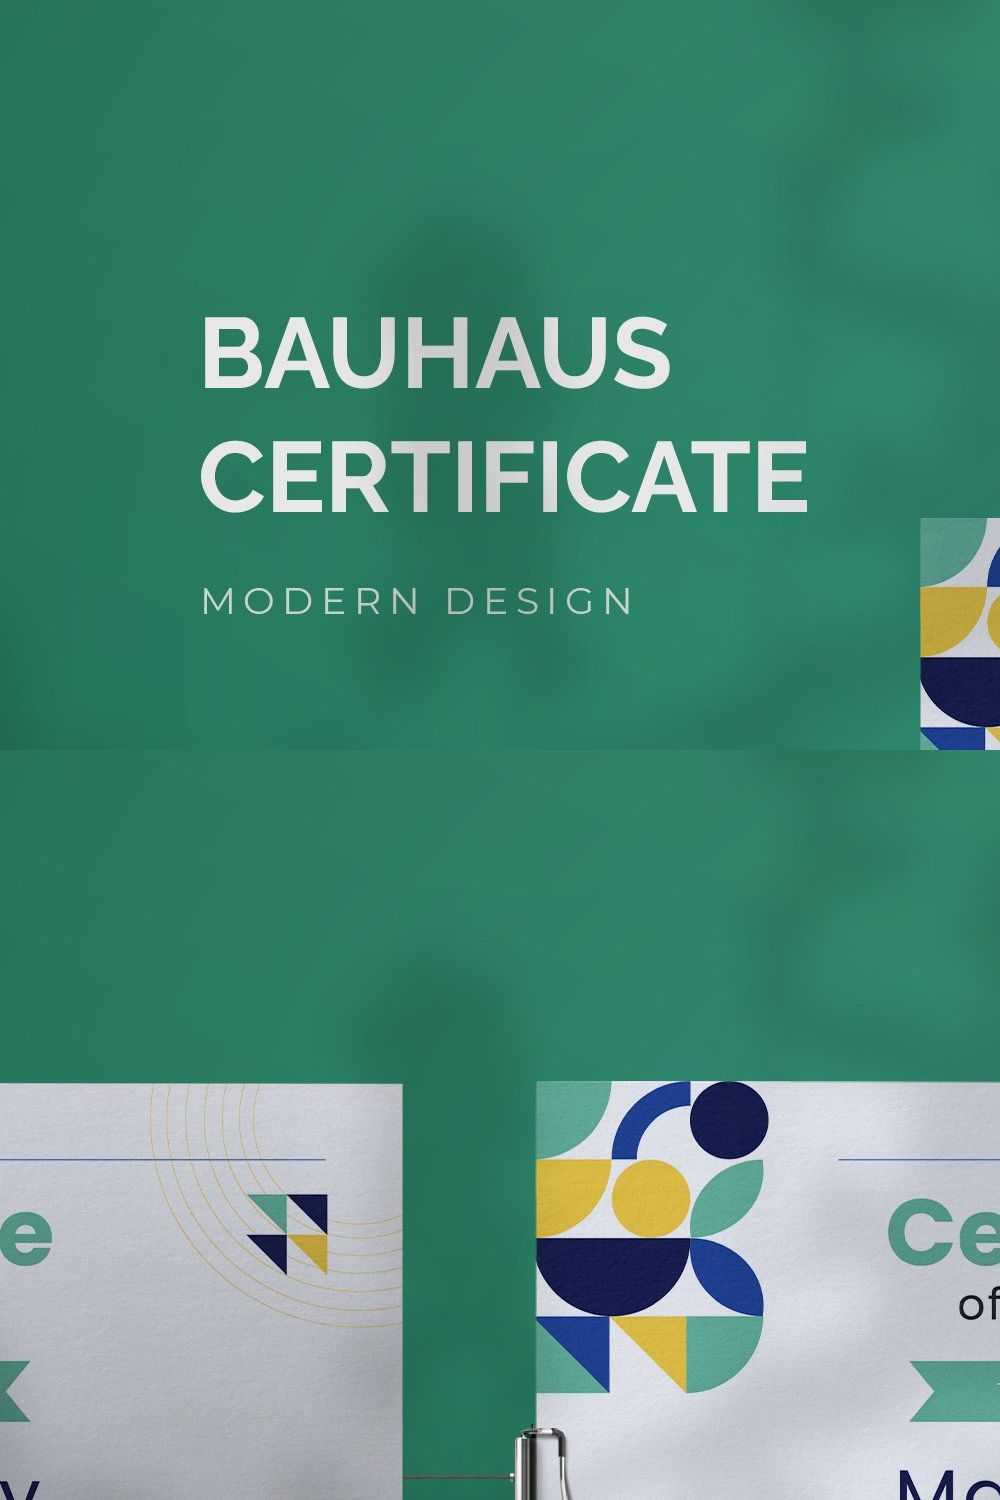 Bauhaus Gemotrics - Certificate pinterest preview image.